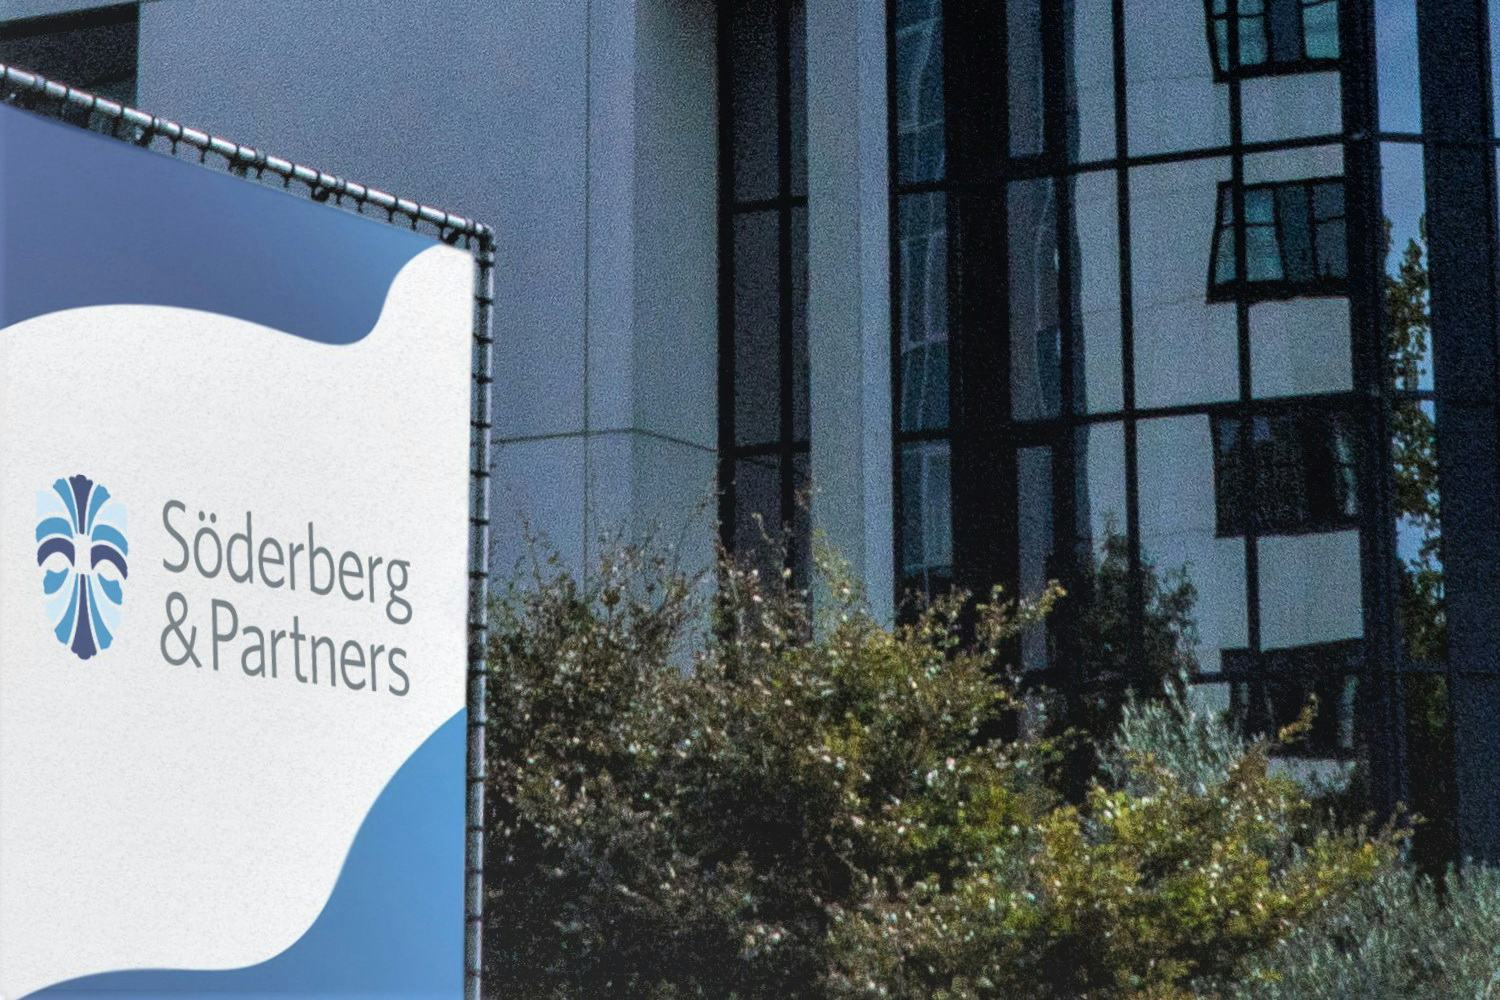 Söderberg & Partners Nederland stapt in vermogensbeheer